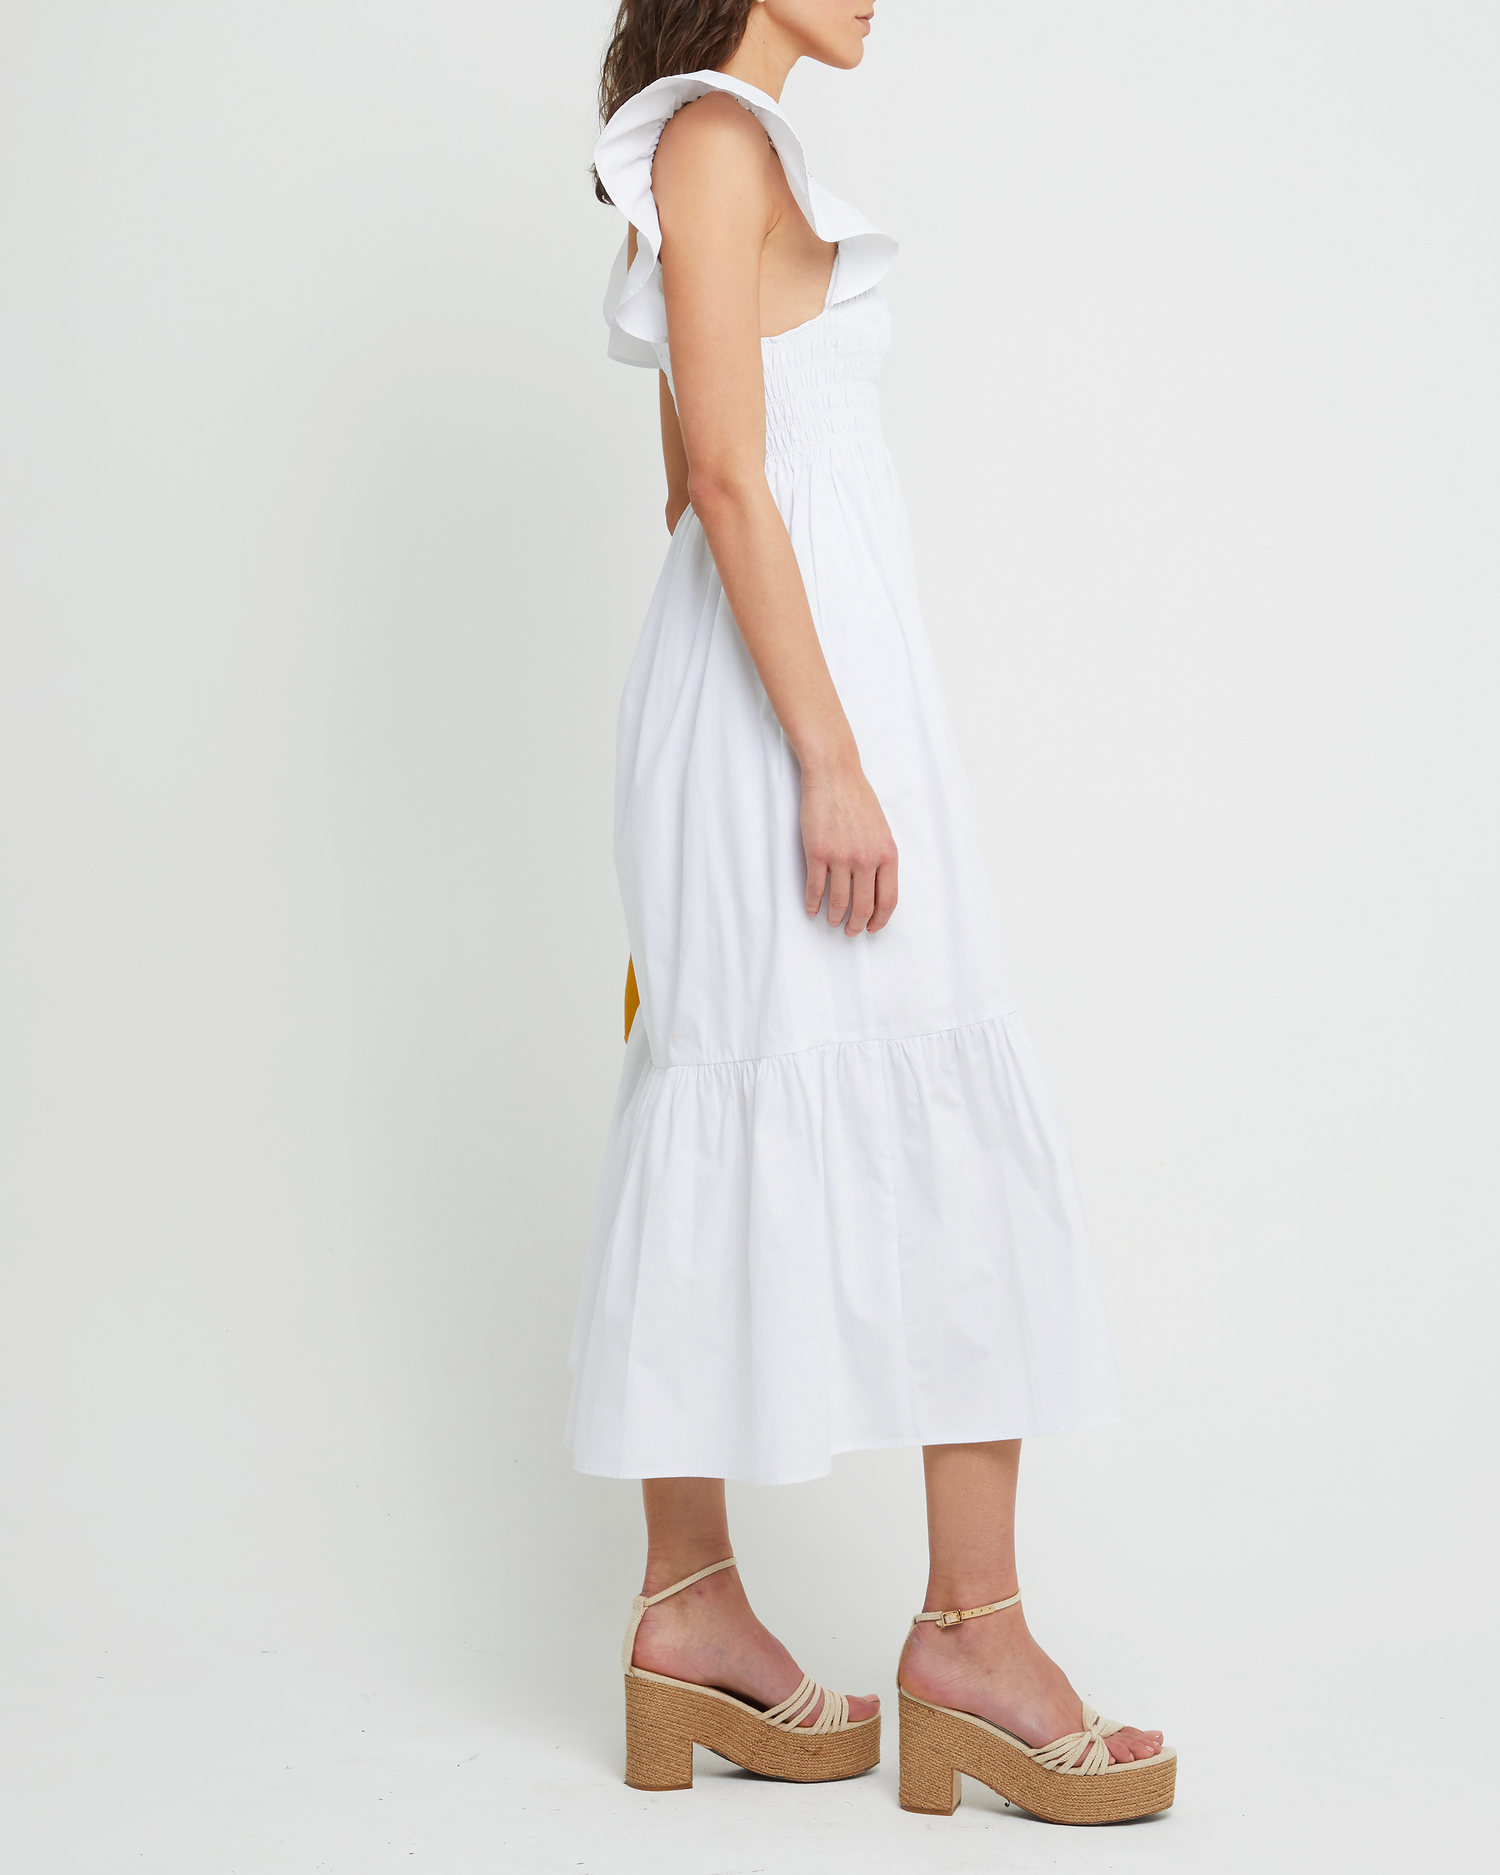 Third image of Tuscany Dress, a white maxi dress, smocked bodice, ruffled cap sleeves, pockets